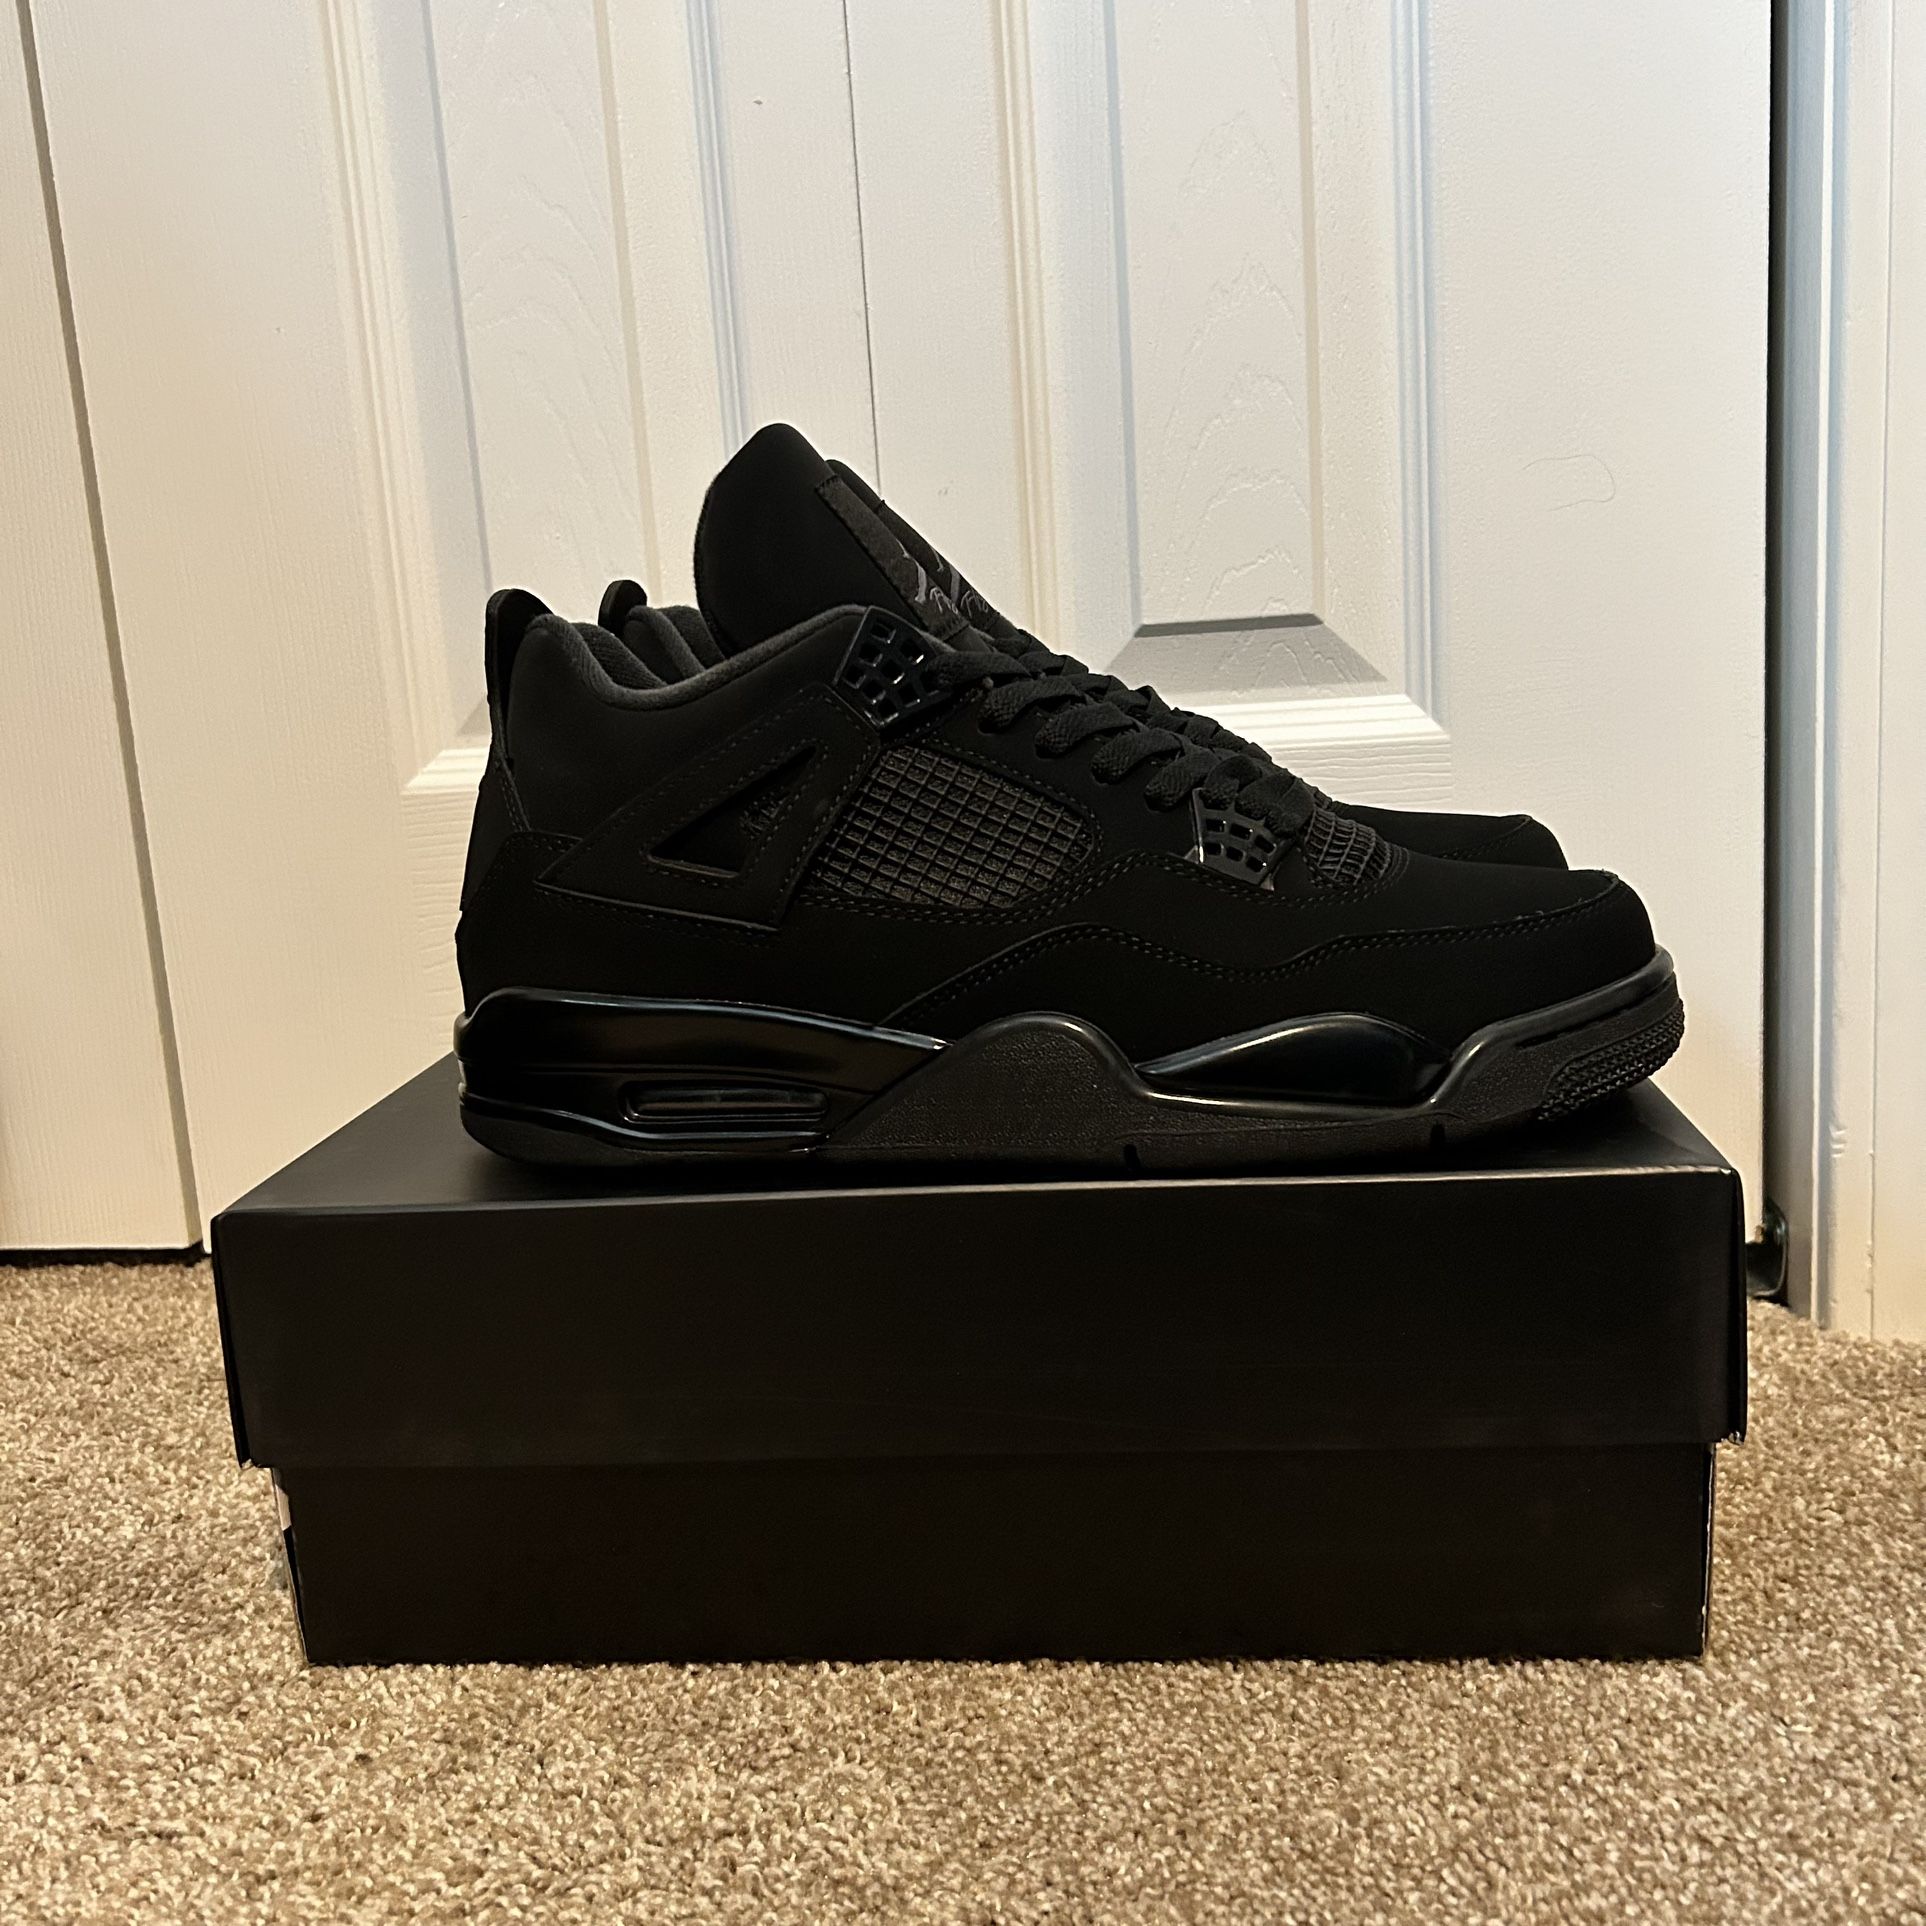 Air Jordan 4 Black Cat size 12